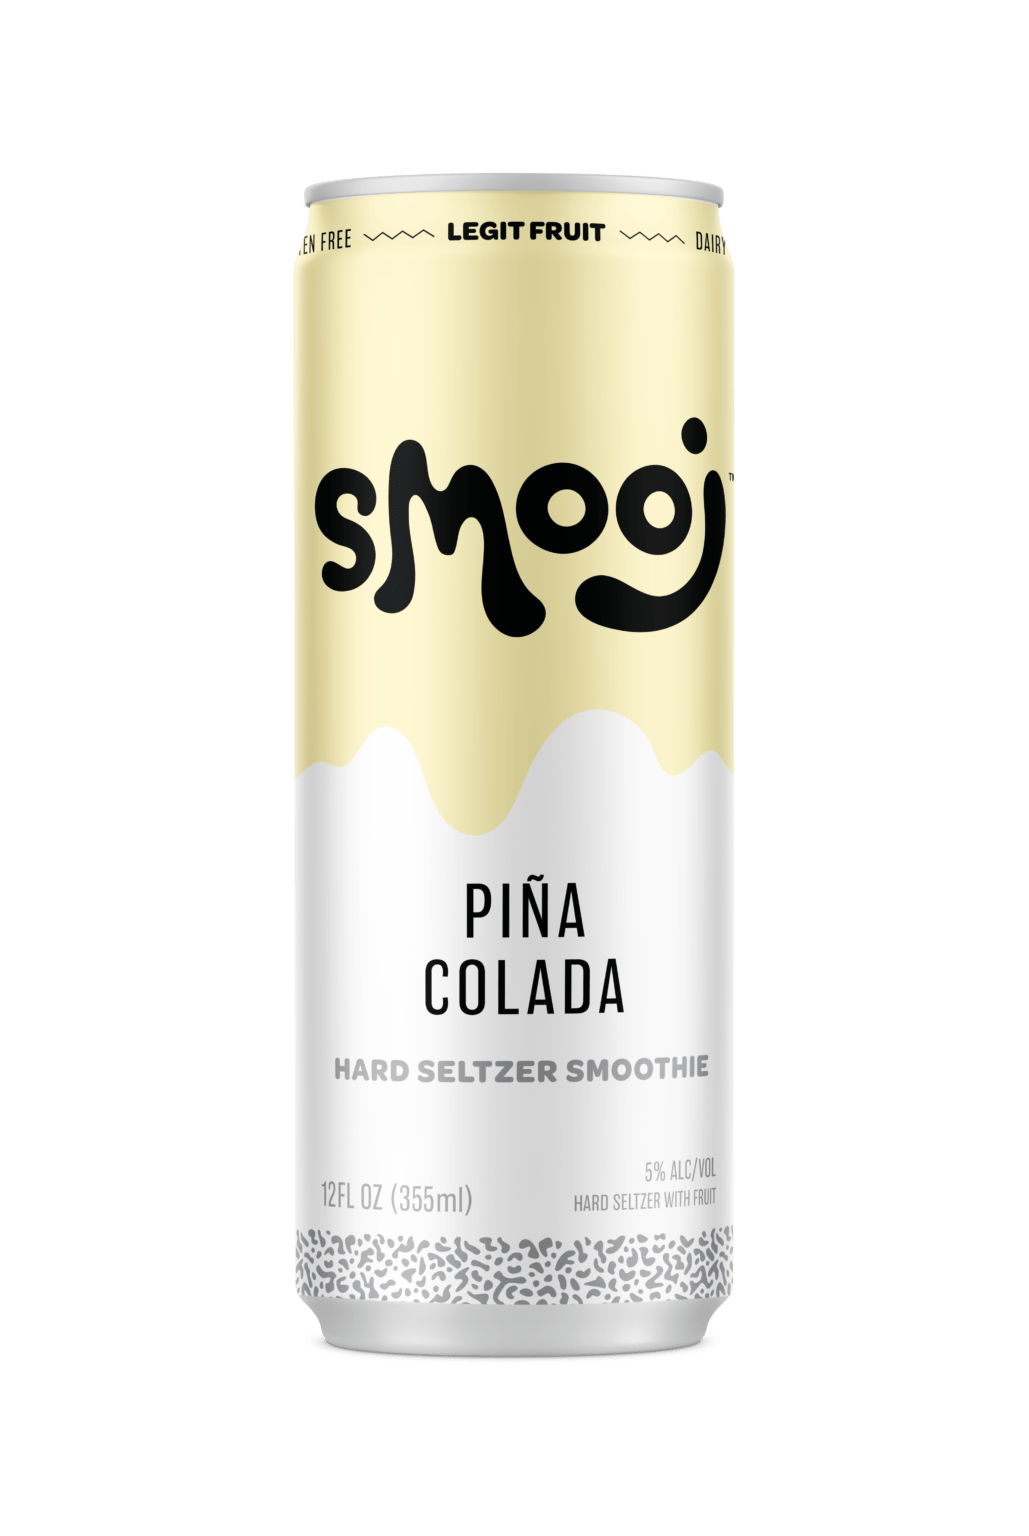 Buy Smooj Piña Colada Hard Seltzer Smoothie Online -Craft City